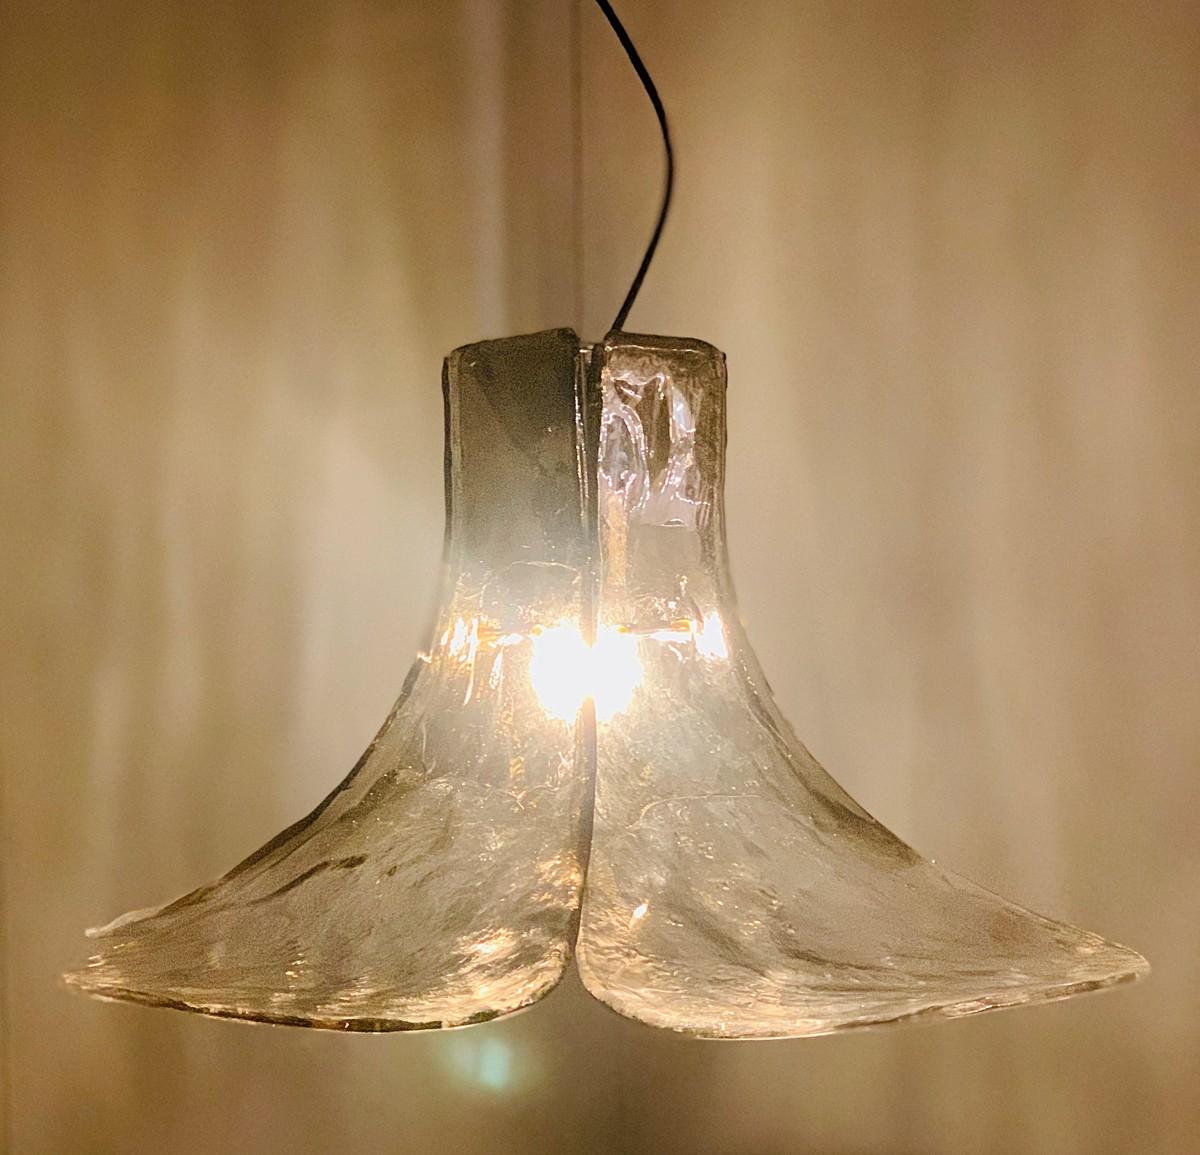 Murano glass hanging lamp by Carlo Nason for AV Mazzega, 1960s.